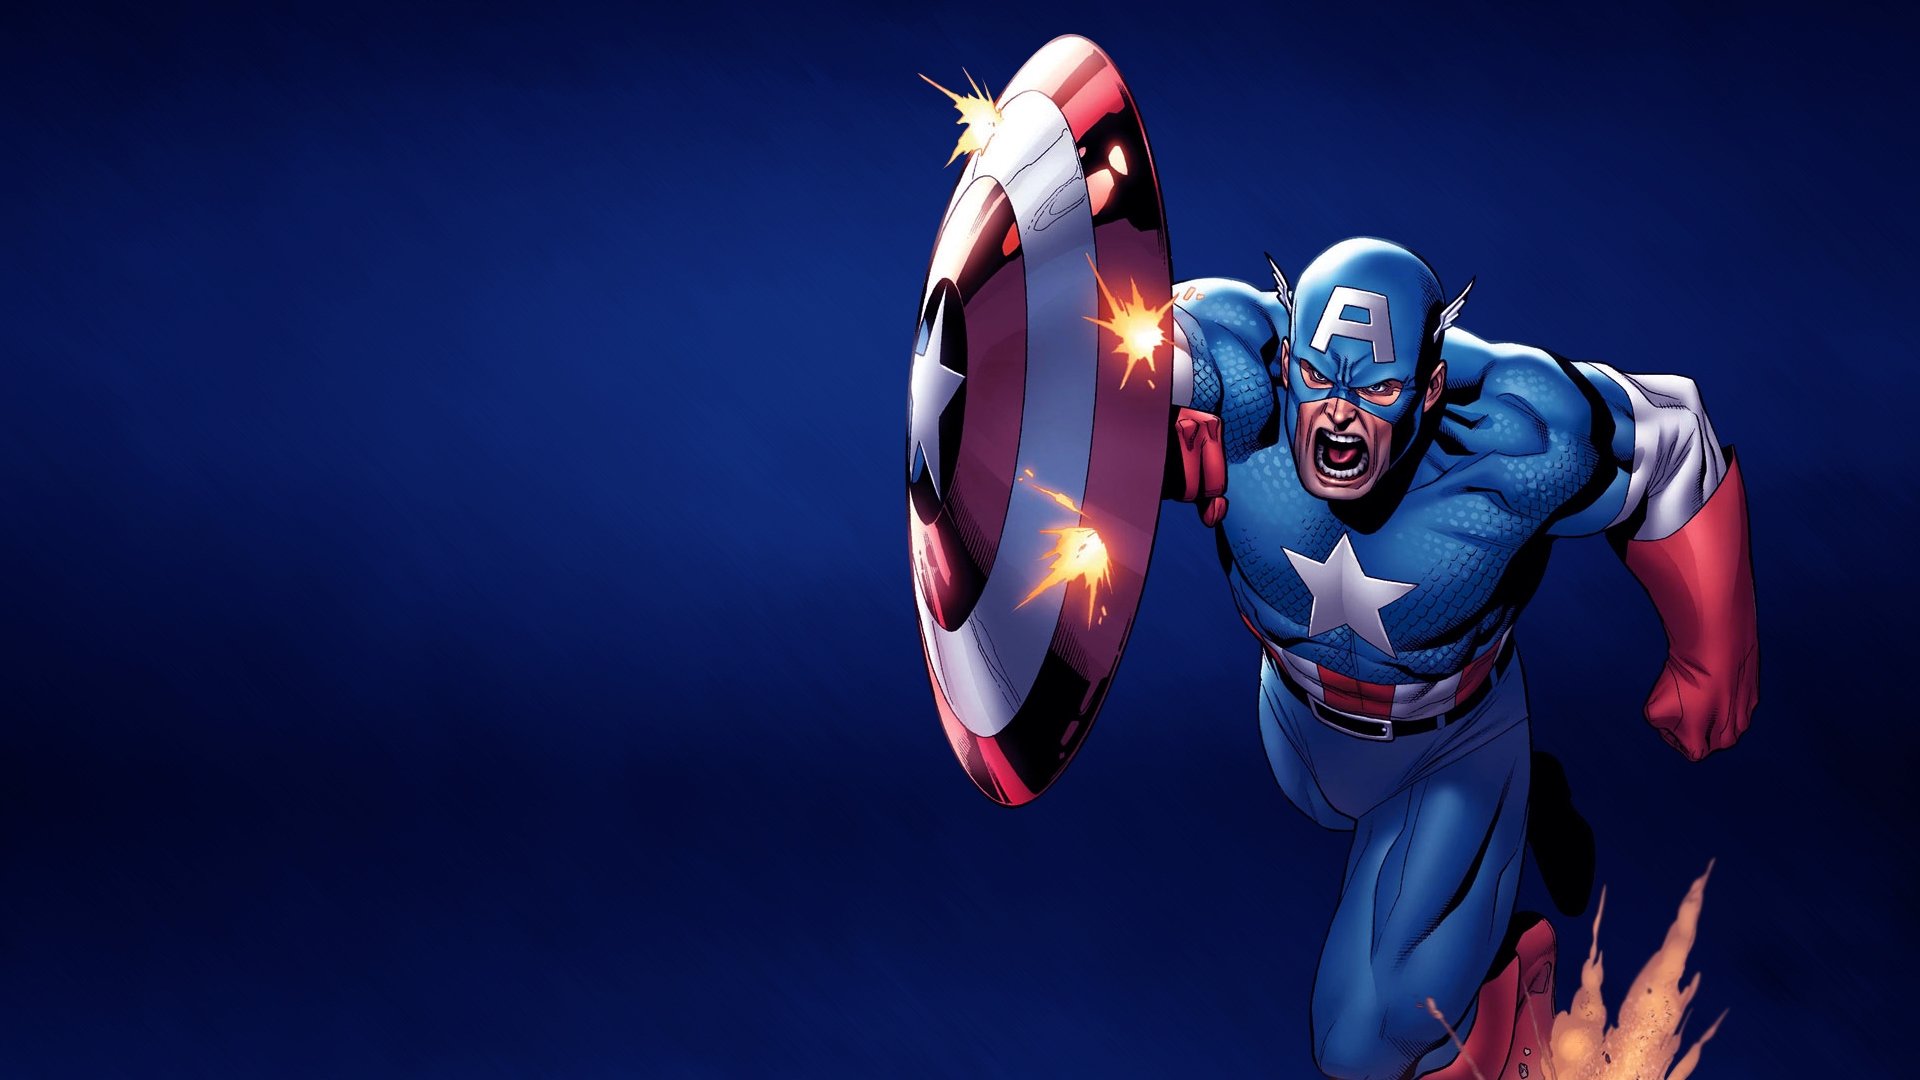 Free download Captain America (Marvel comics) wallpaper ID:292770 hd 1920x1080 for desktop